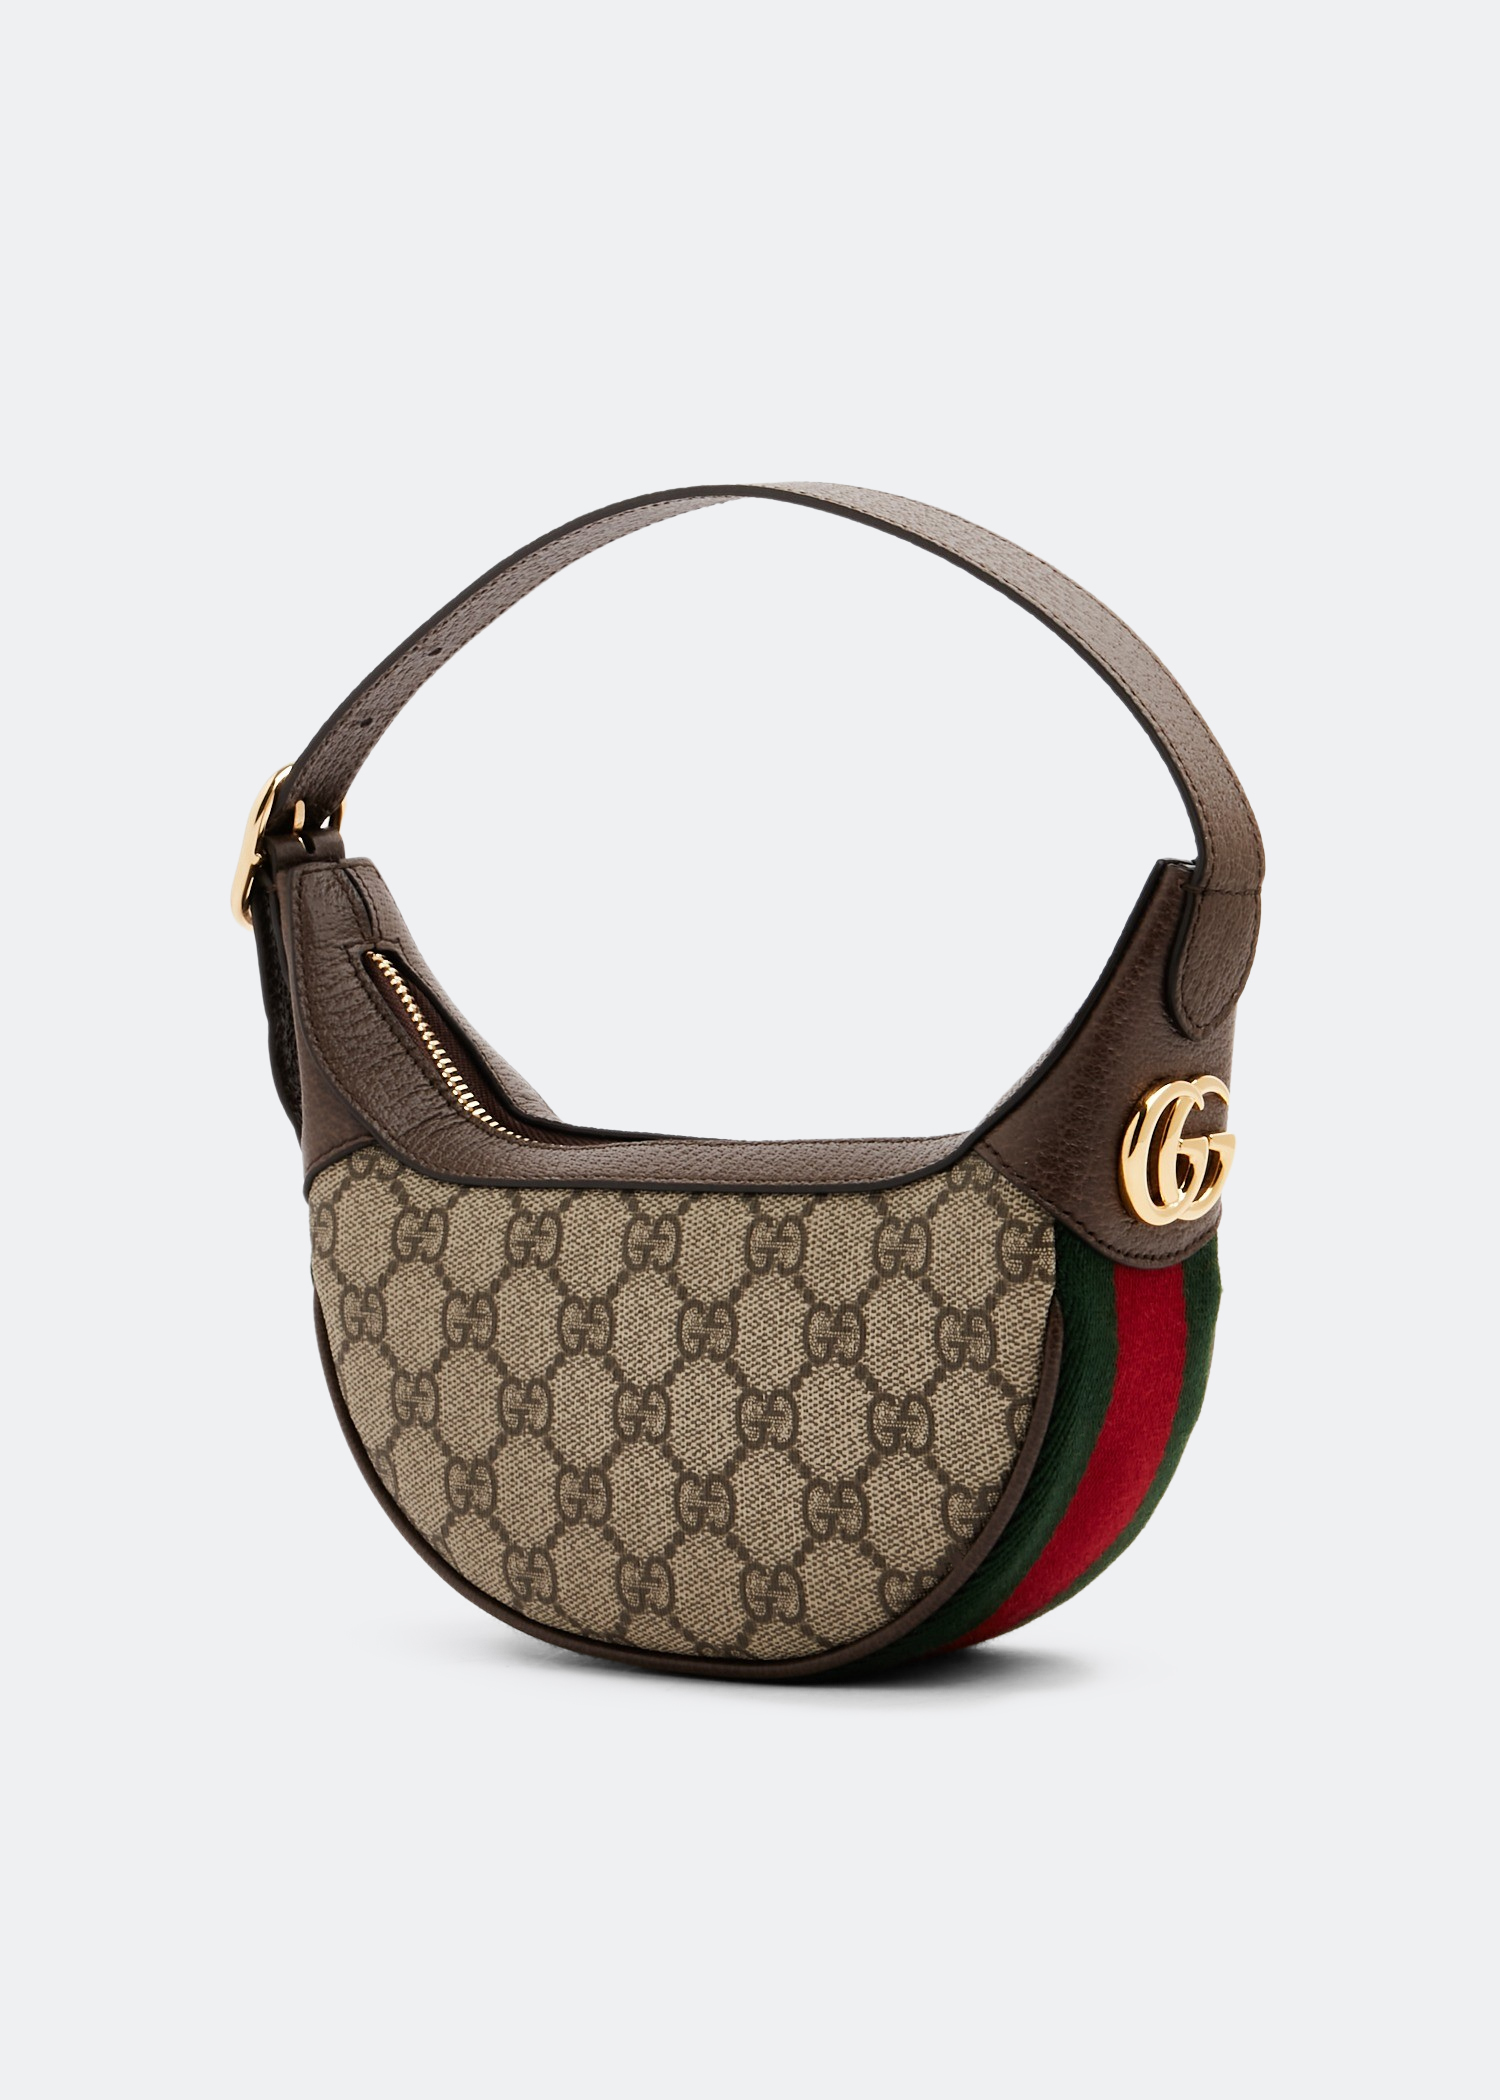 Gucci Ophidia GG mini bag for Women - Beige in UAE